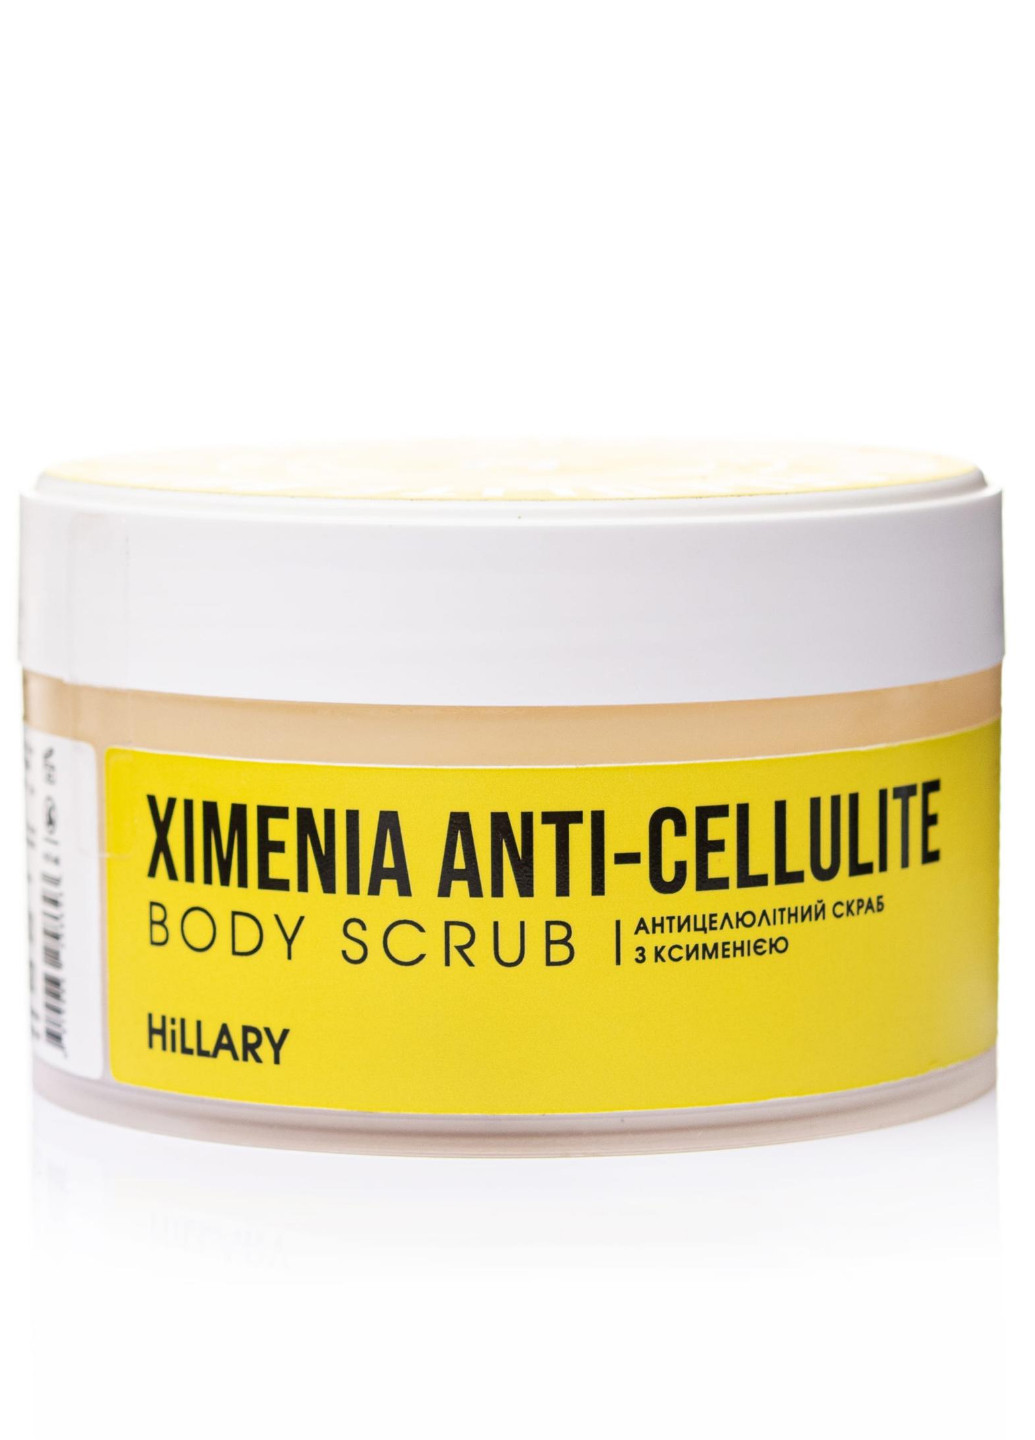 Антицелюлітний скраб з ксименією Хimenia Anti-cellulite Body Scrub, 200 г Hillary (254015496)